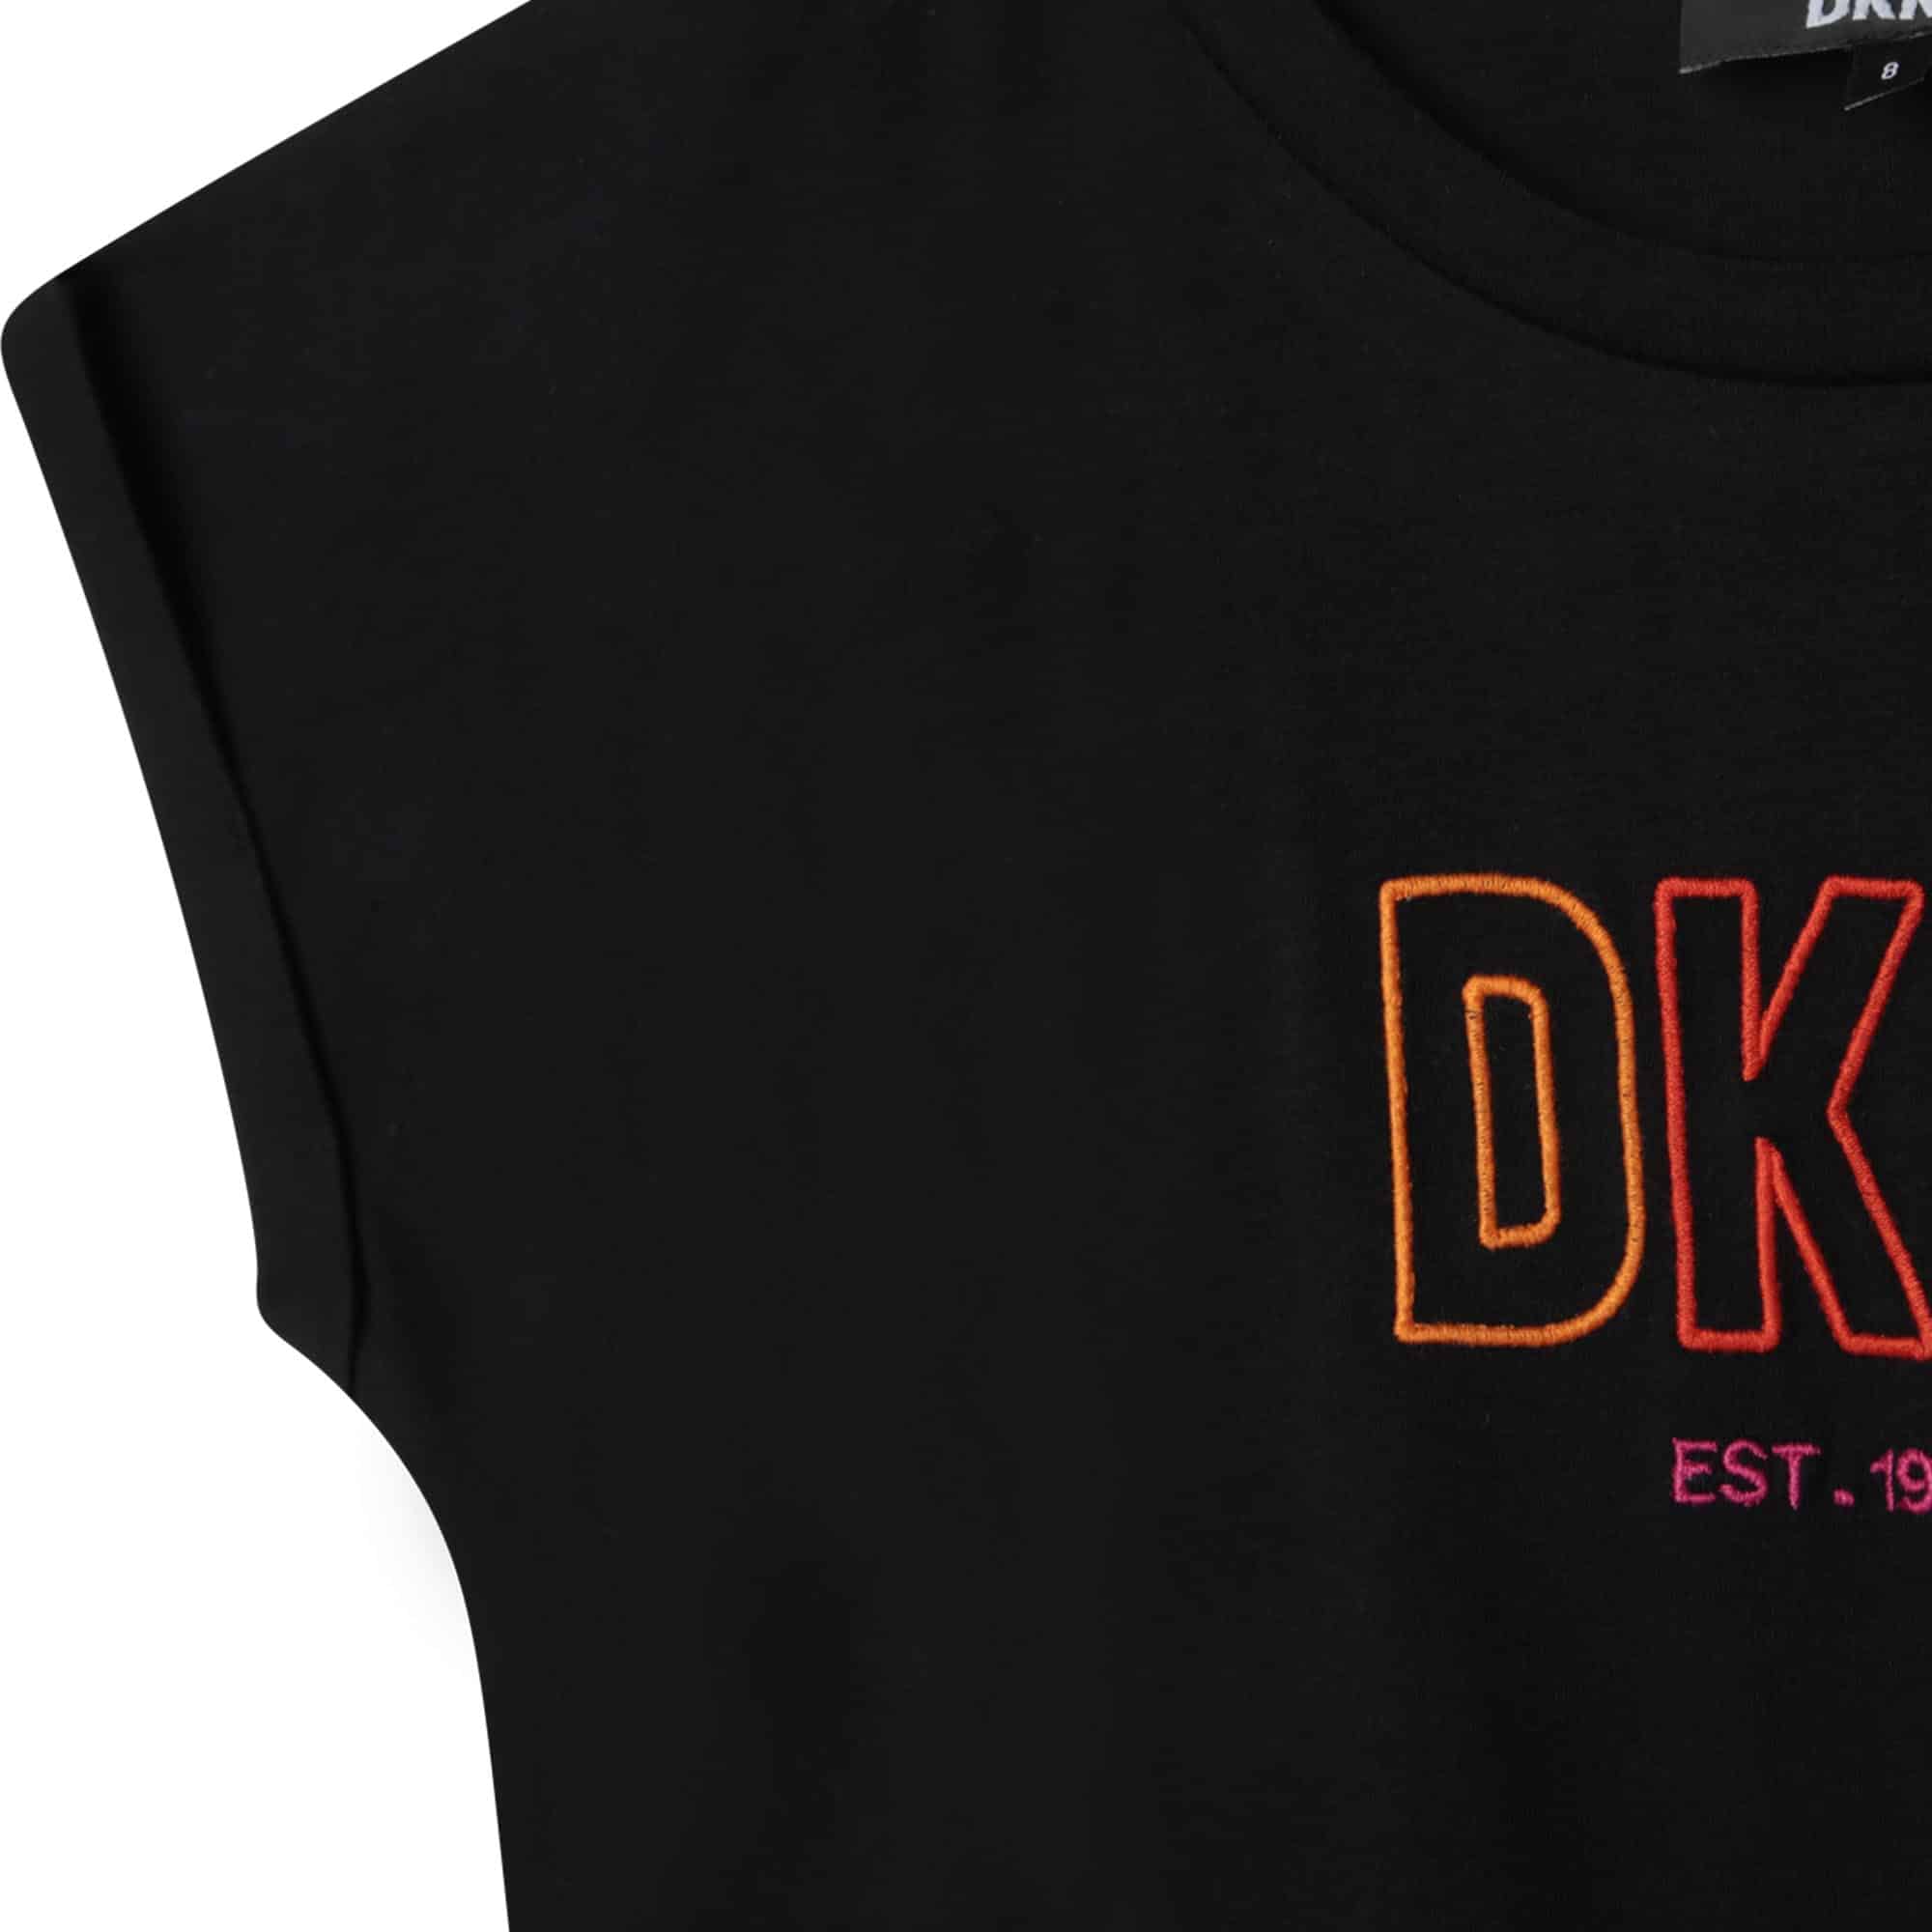 DKNY girls black tshirt with multi coloured logo close up